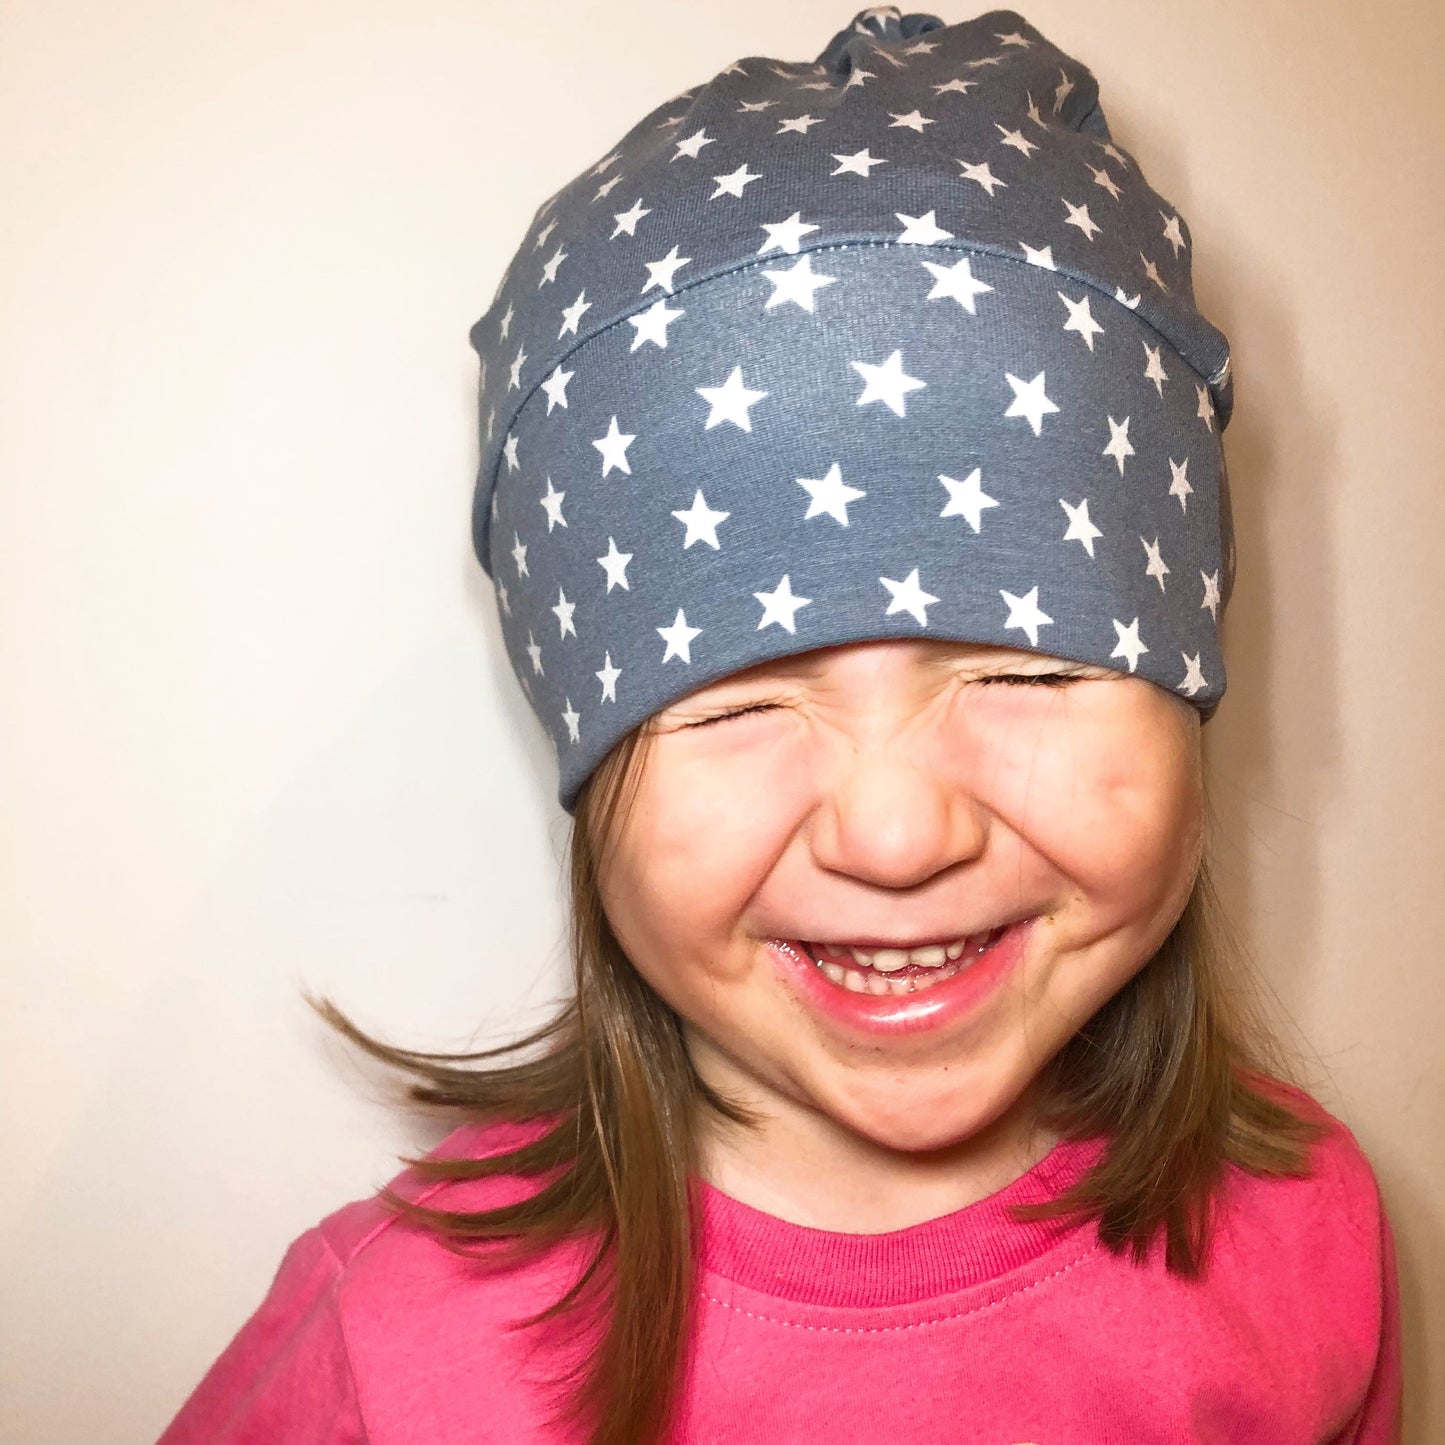 Beanie Hat in Little Kid: Leaves